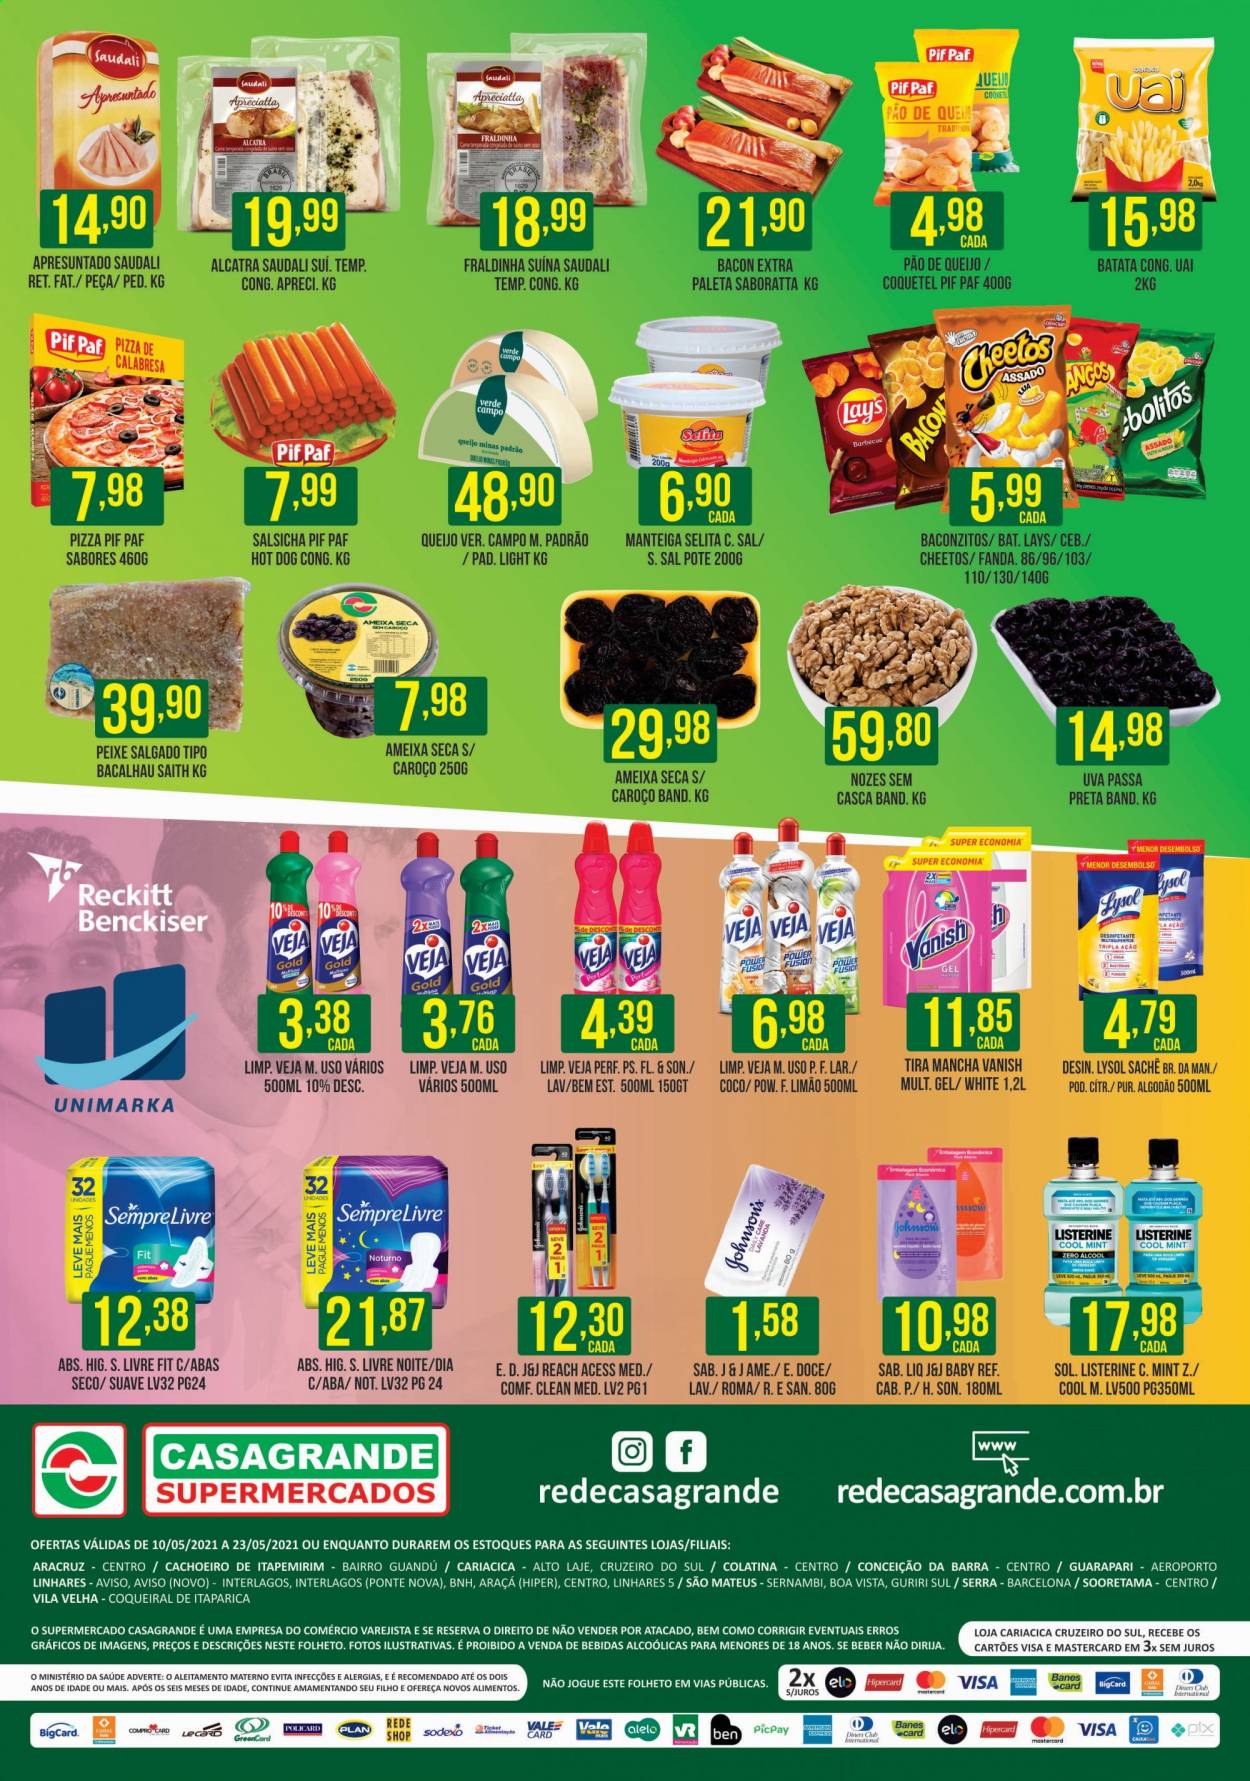 Encarte Casagrande Supermercados  - 10.05.2021 - 23.05.2021.